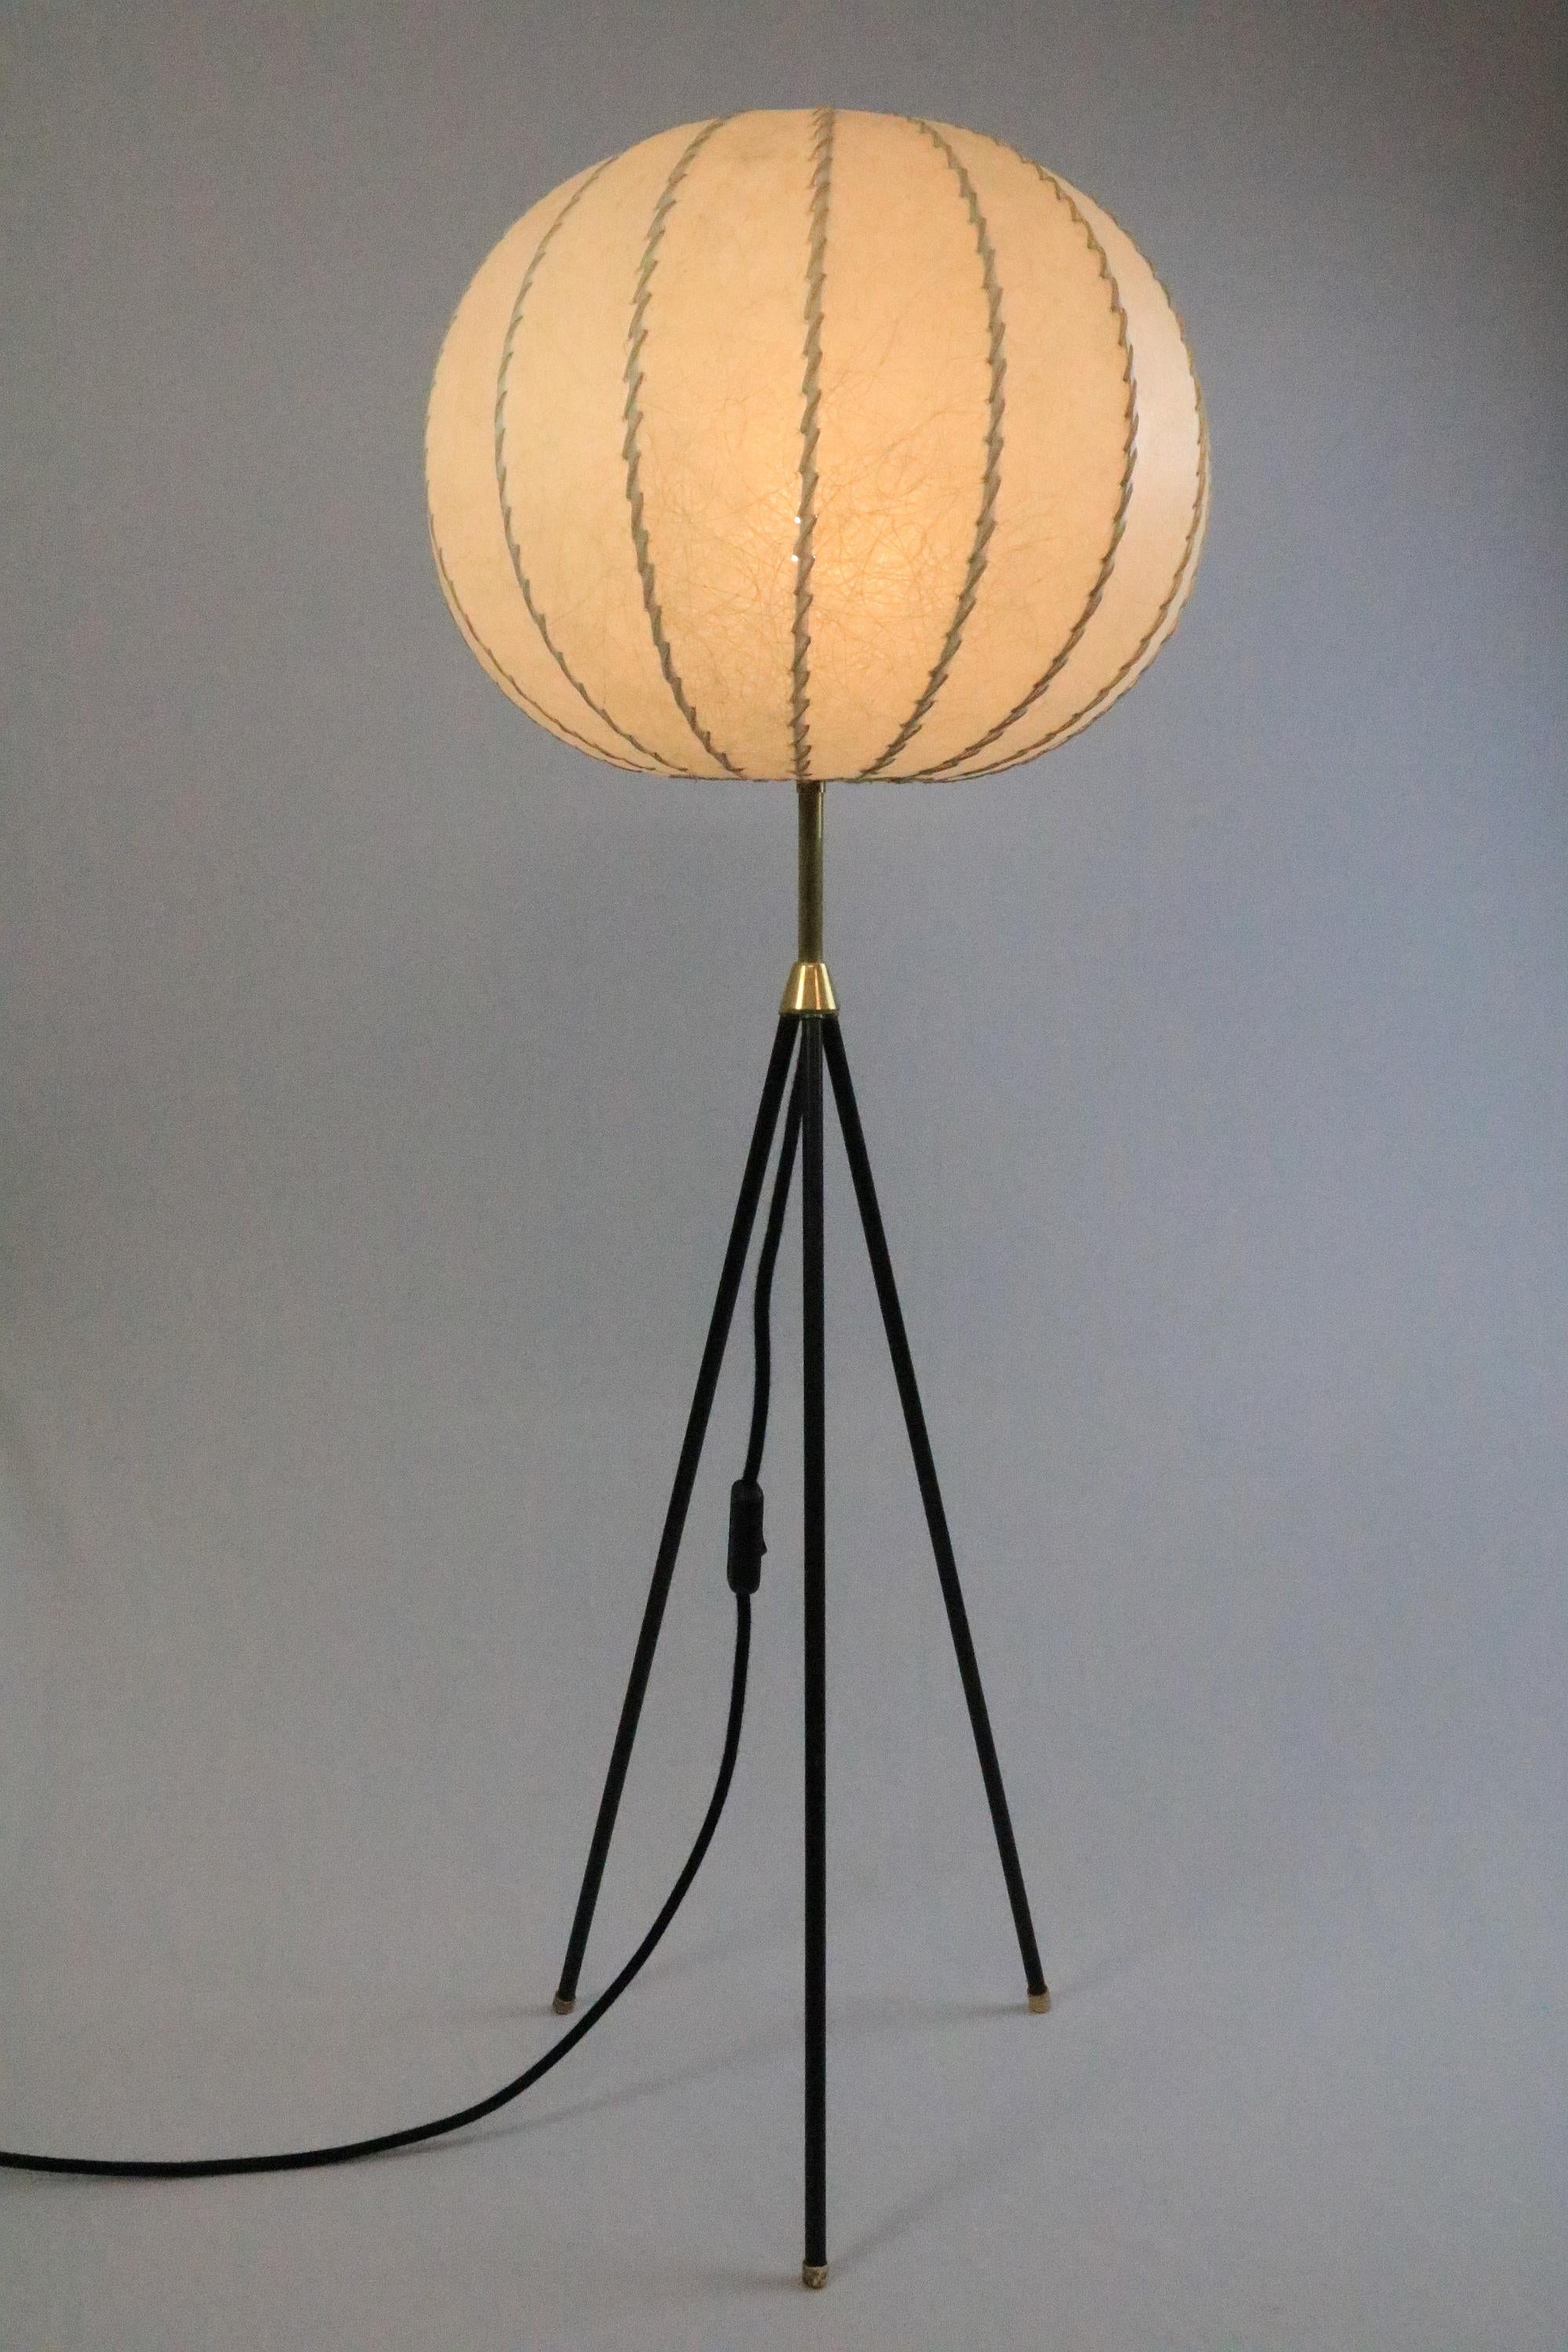 20th Century German Midcentury Tripod Floor Lamp, Cocoon Lampshade